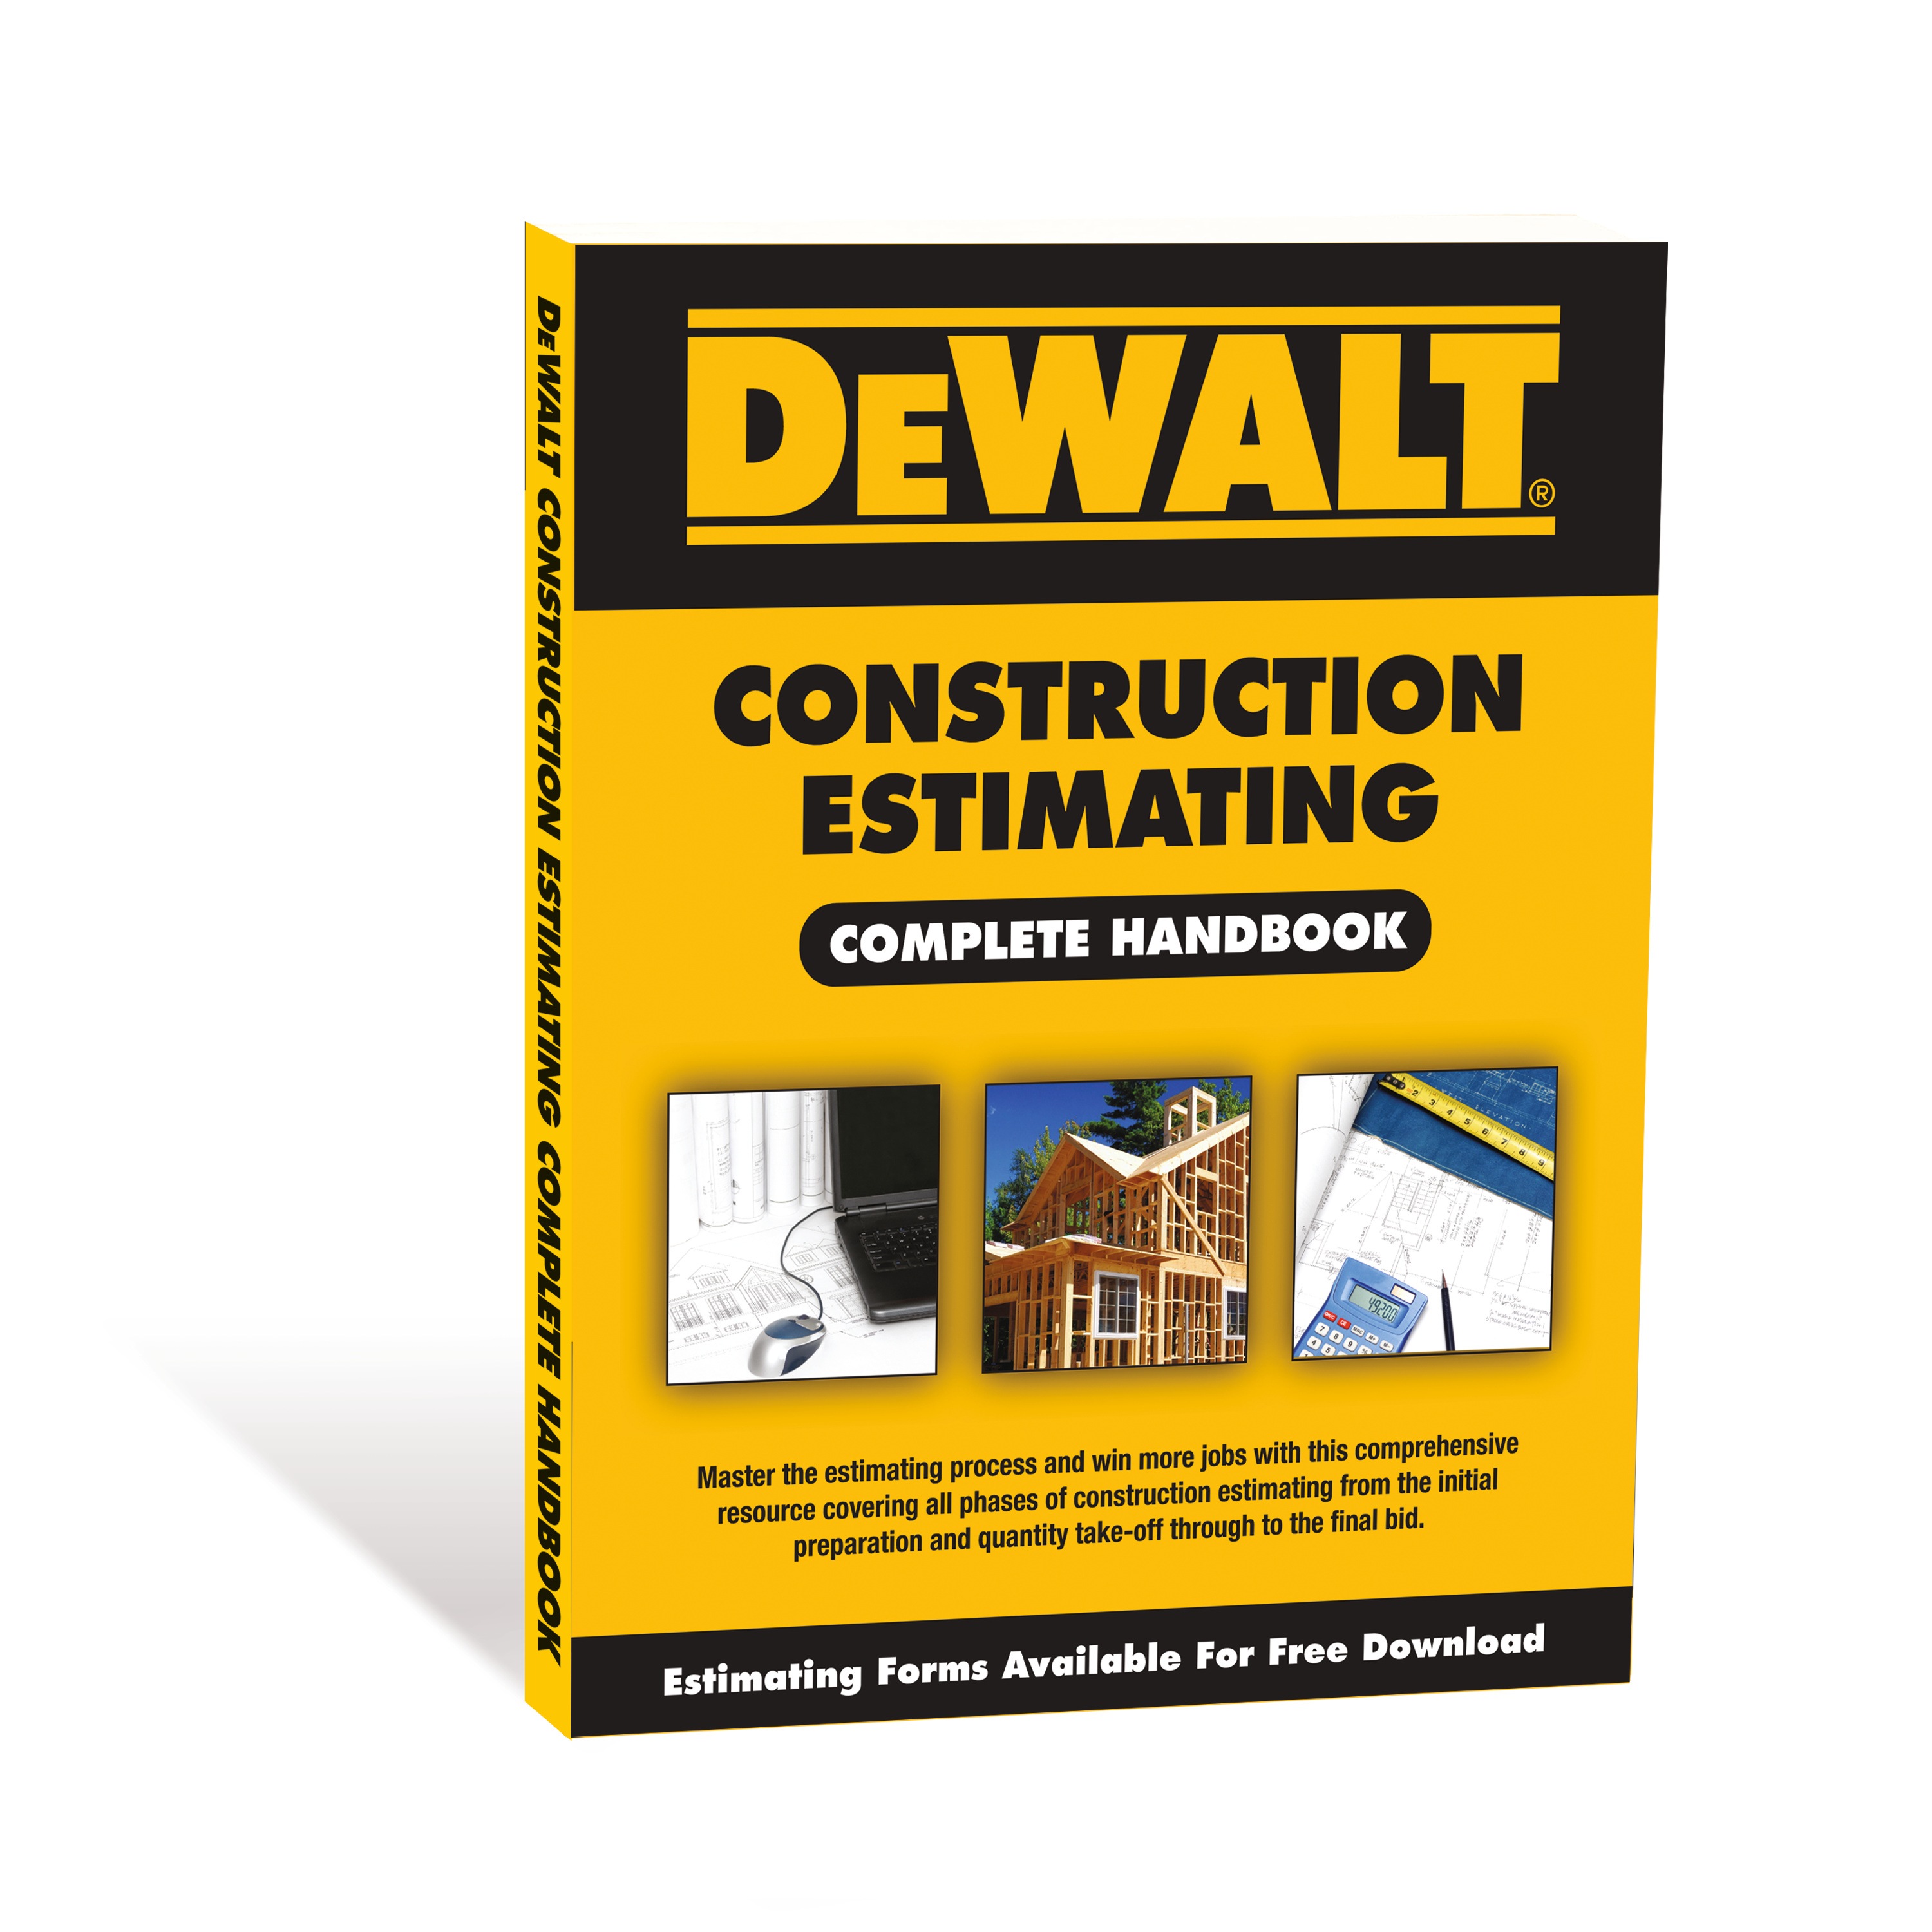 Dewalt Construction Estimating Complete Handbook Dxrg55899 - 